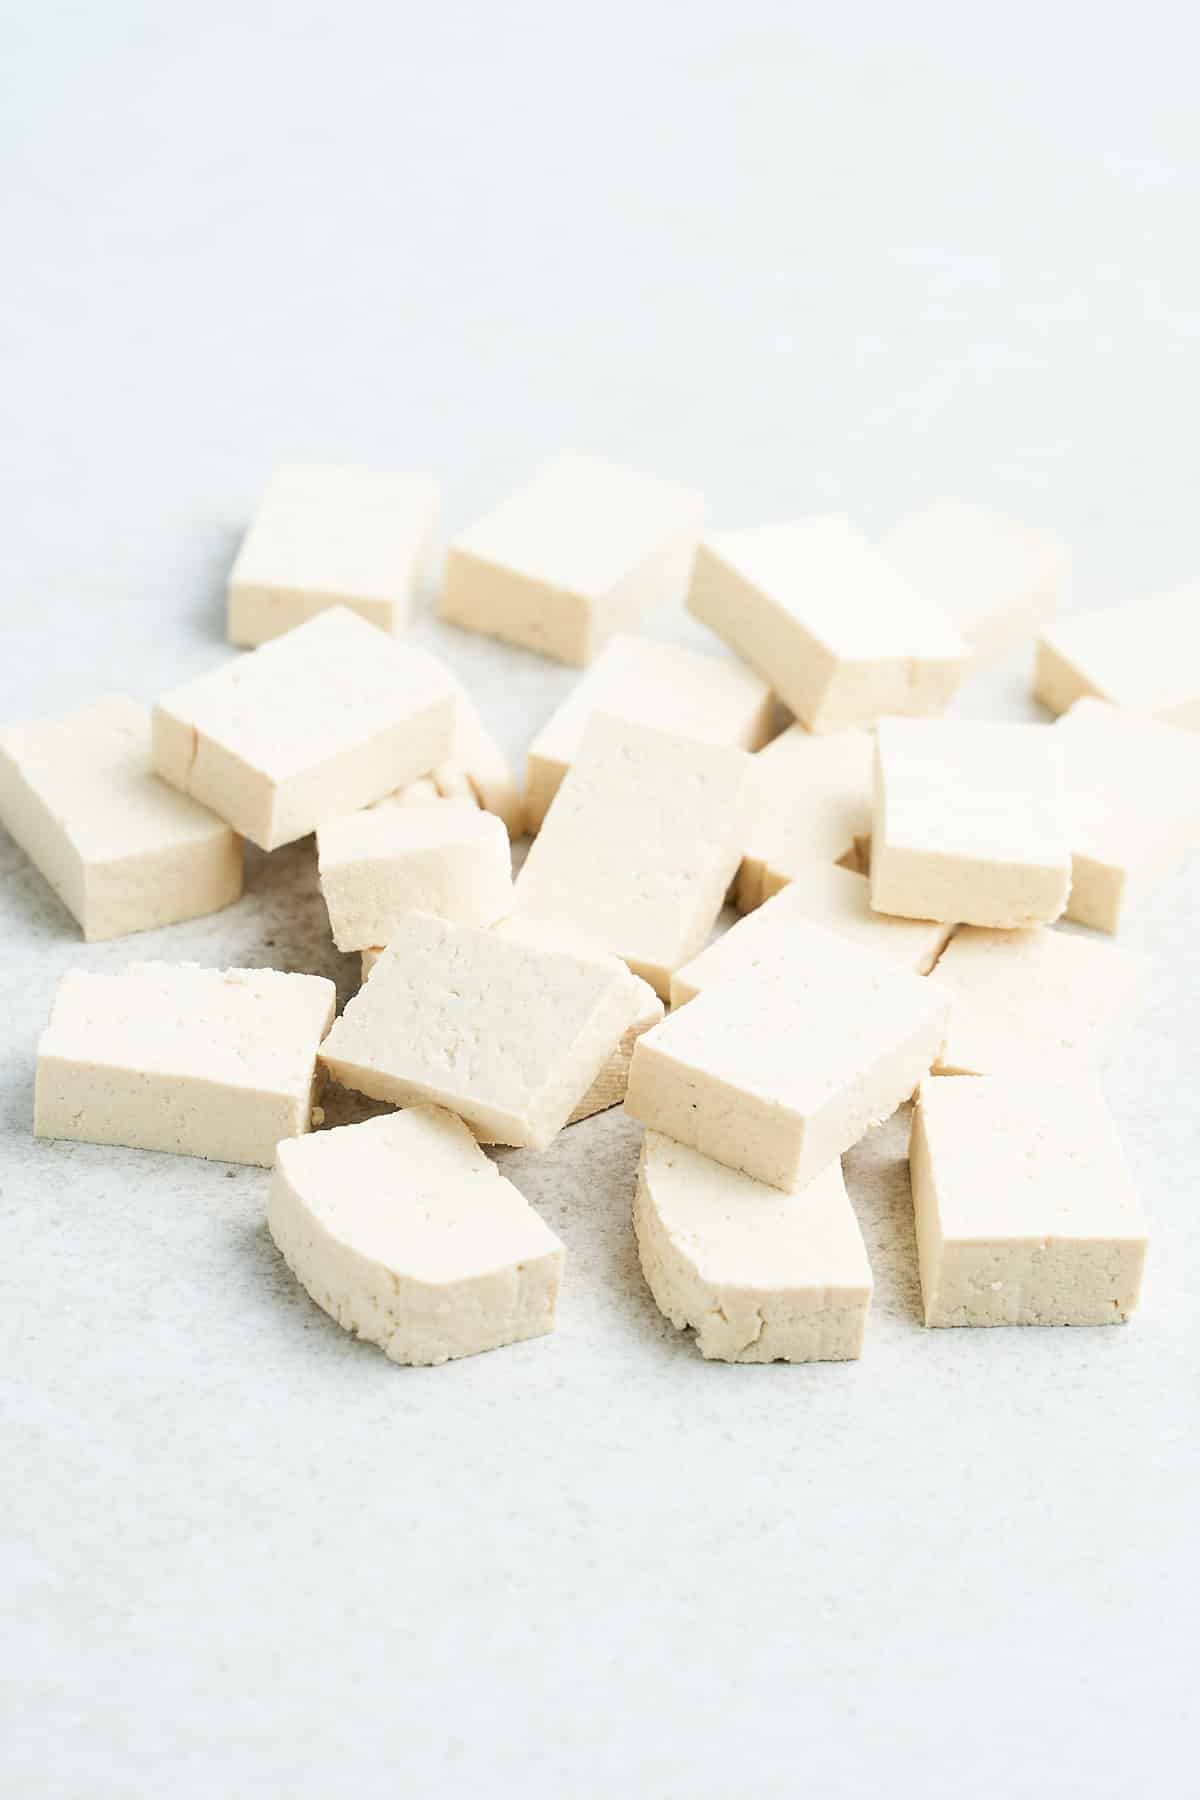 Cubes of tofu.